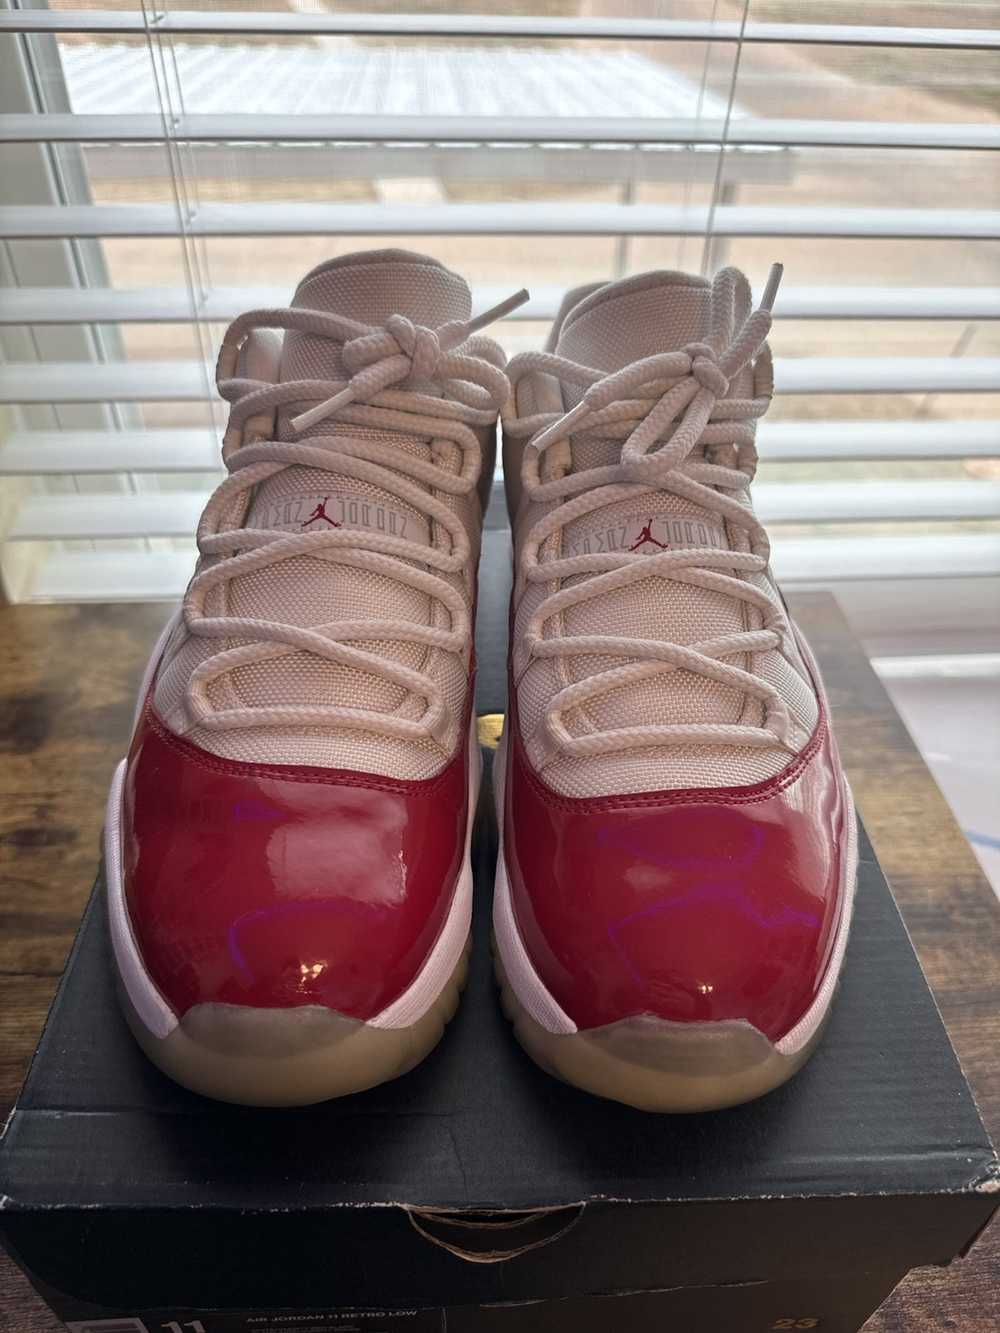 Jordan Brand × Nike 2016 Cherry 11 low - image 3